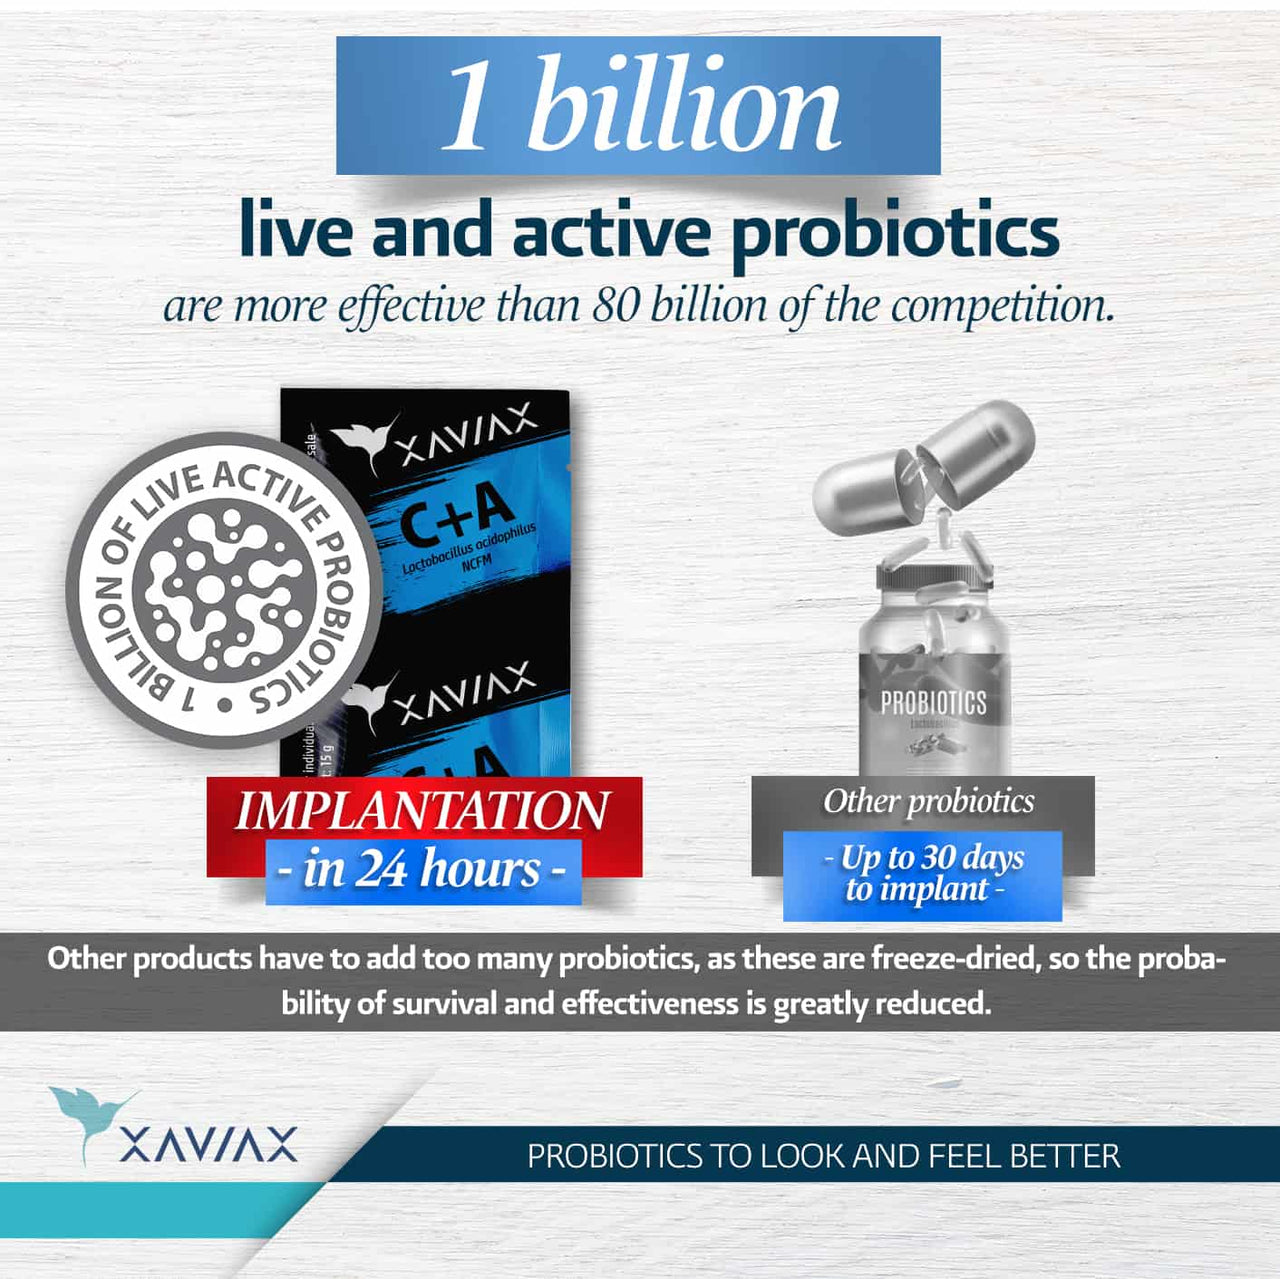 c+a has 1 billion live and active probiotics